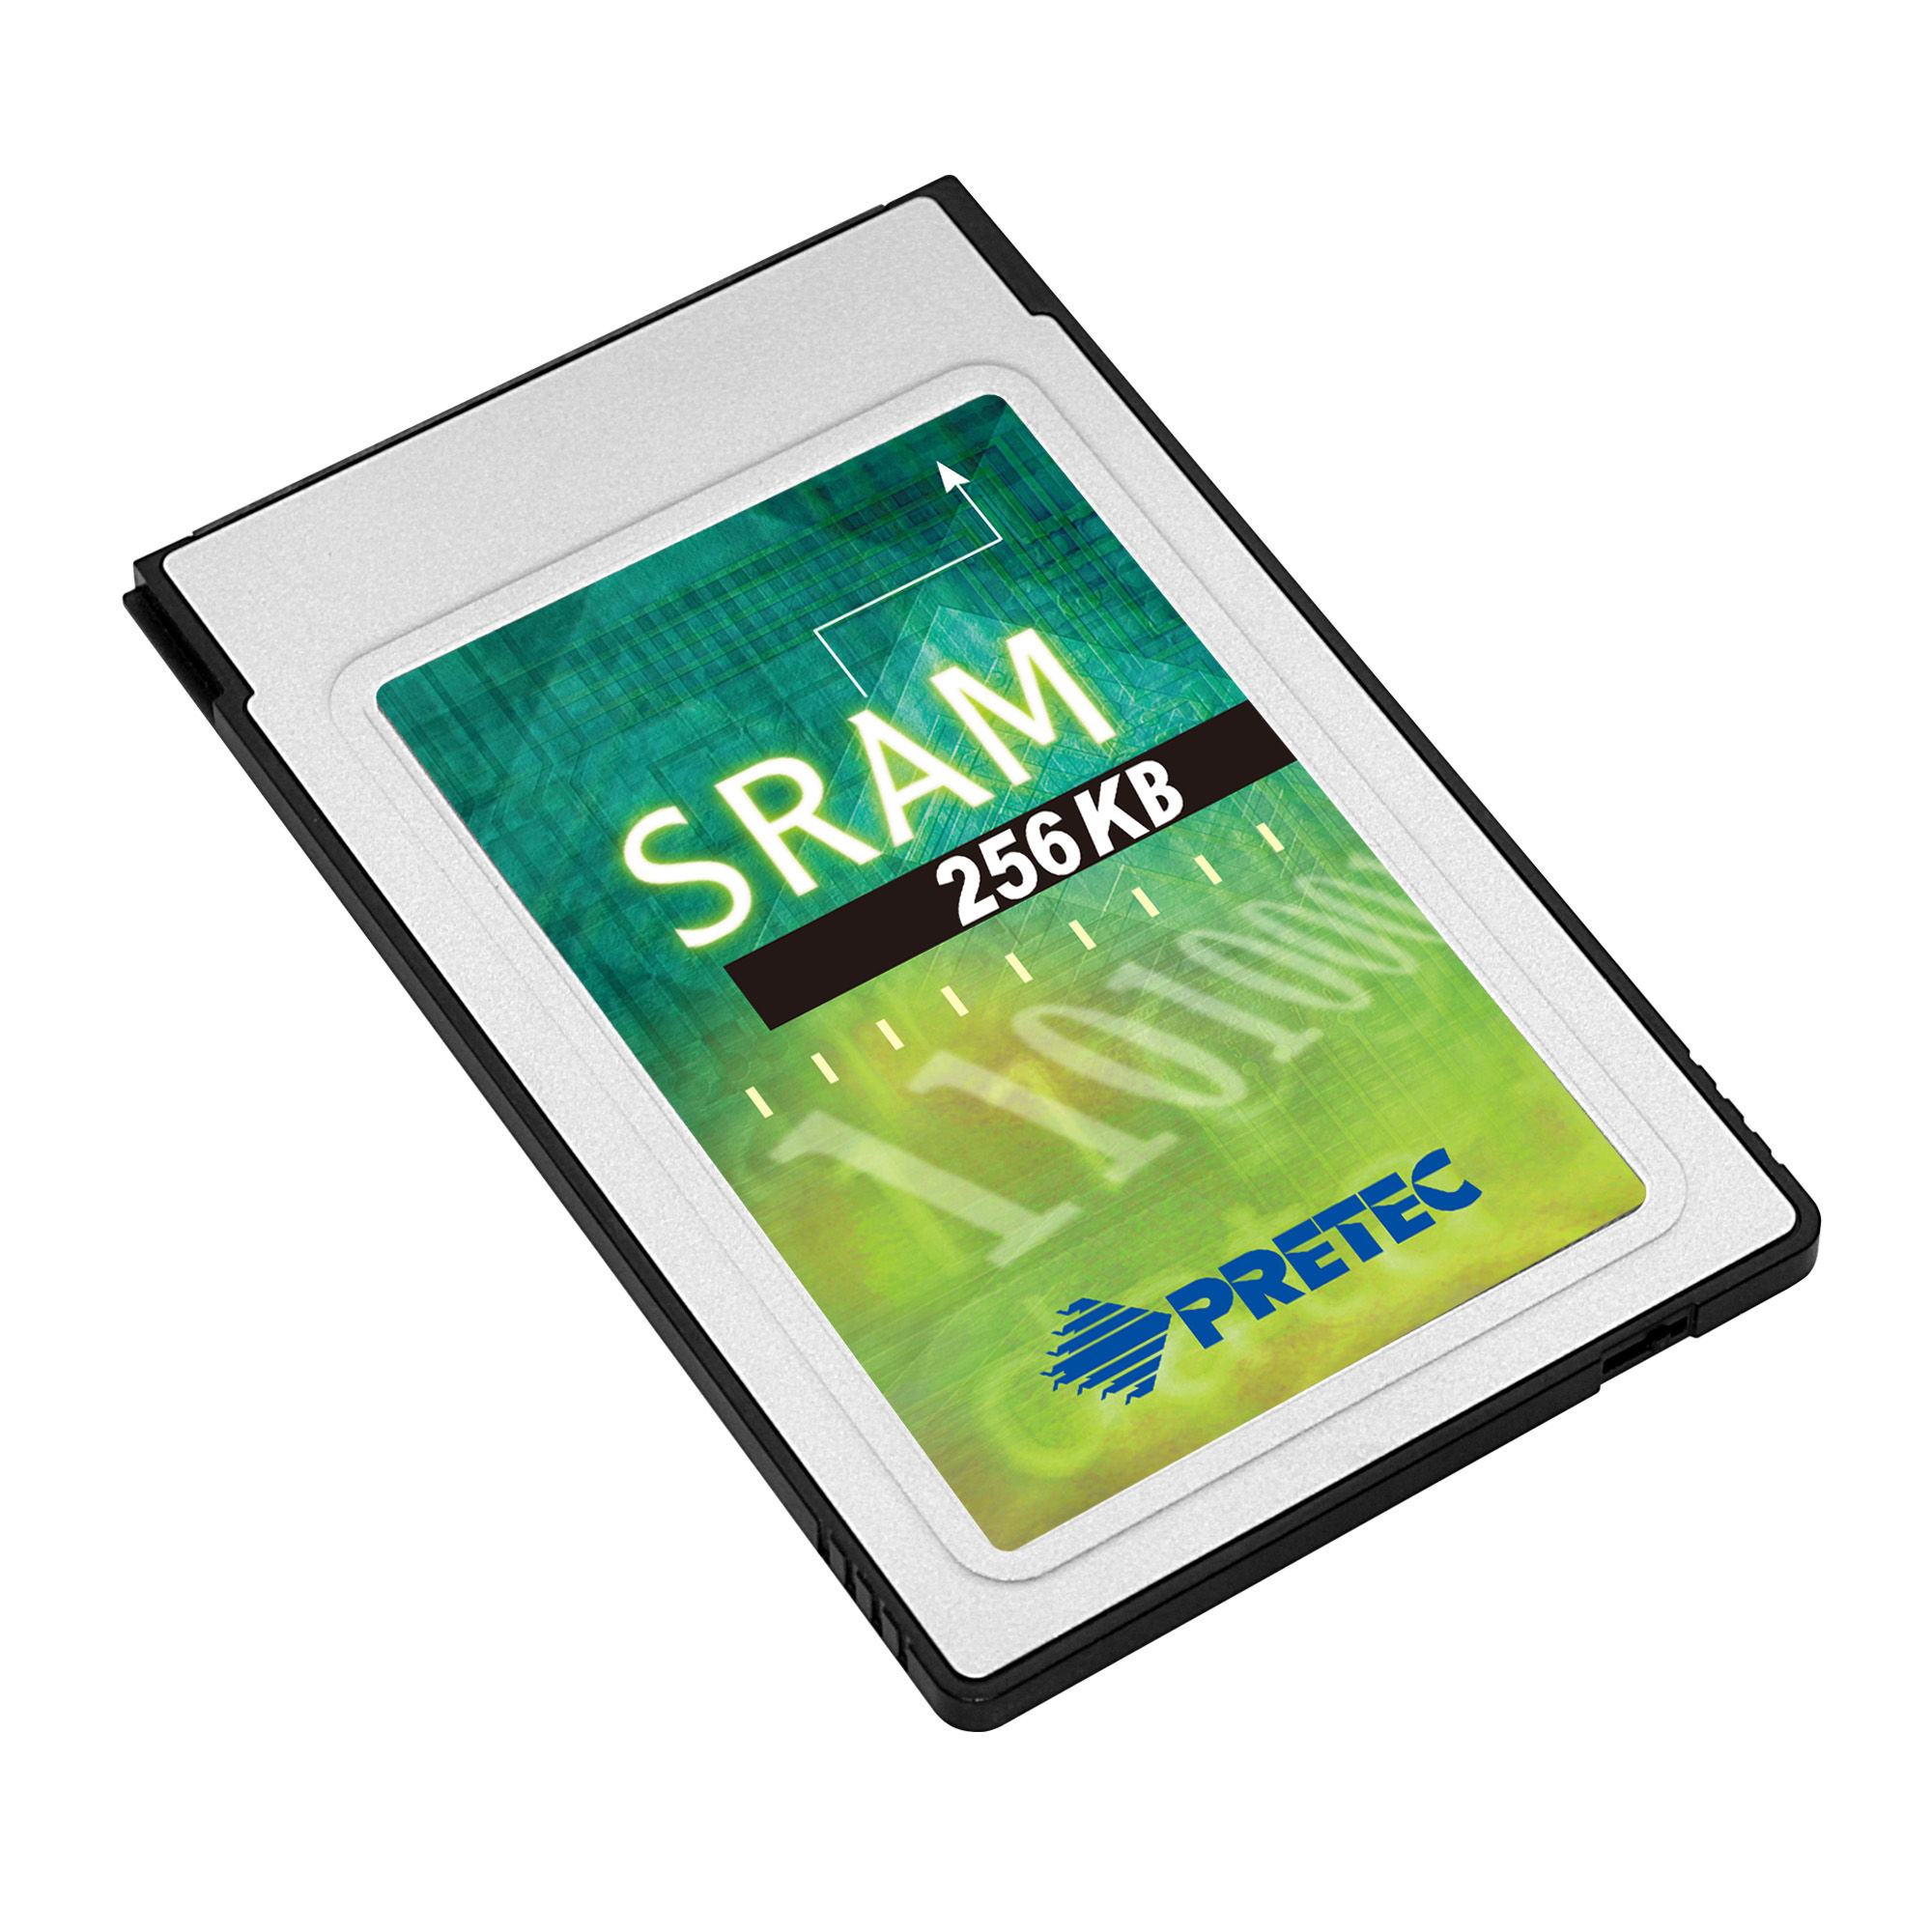 PRETEC PCMCIA SRAM CARD (BATERIA REEMPLAZABLE)